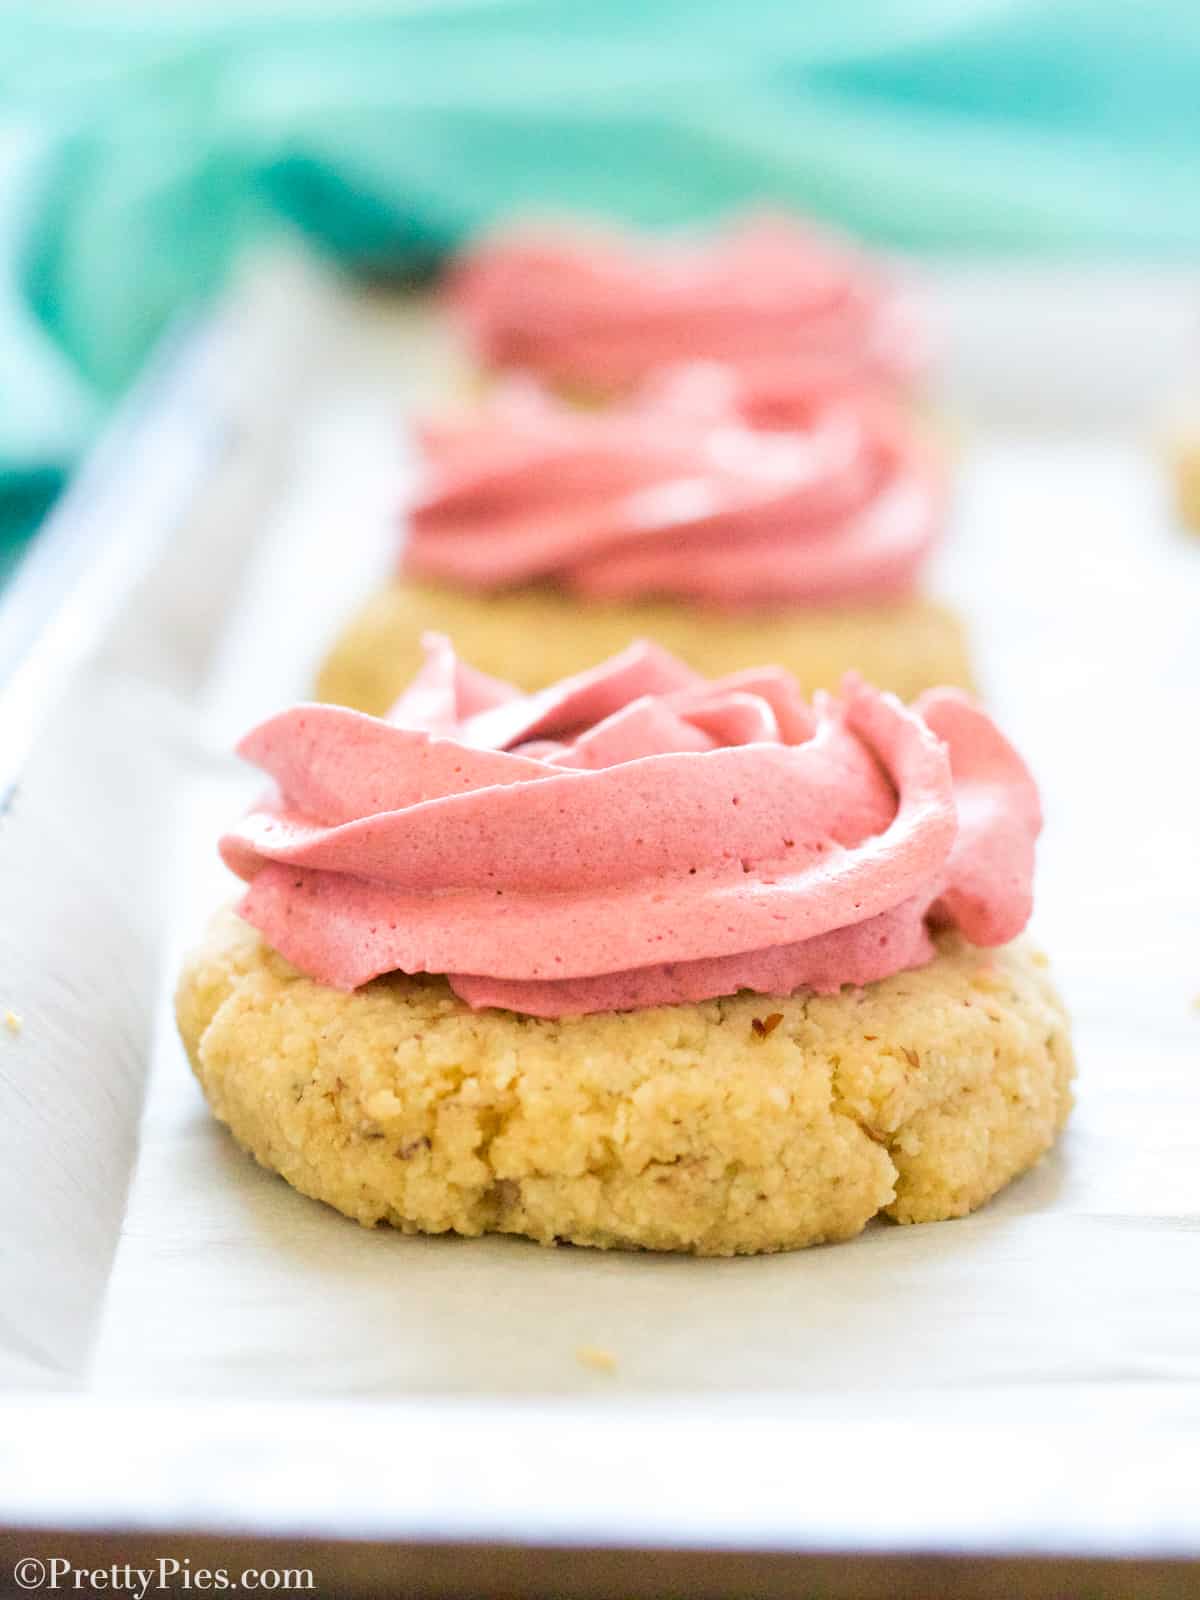 https://prettypies.com/wp-content/uploads/2022/06/Low-Carb-Crumbl-Cookies-08.jpg